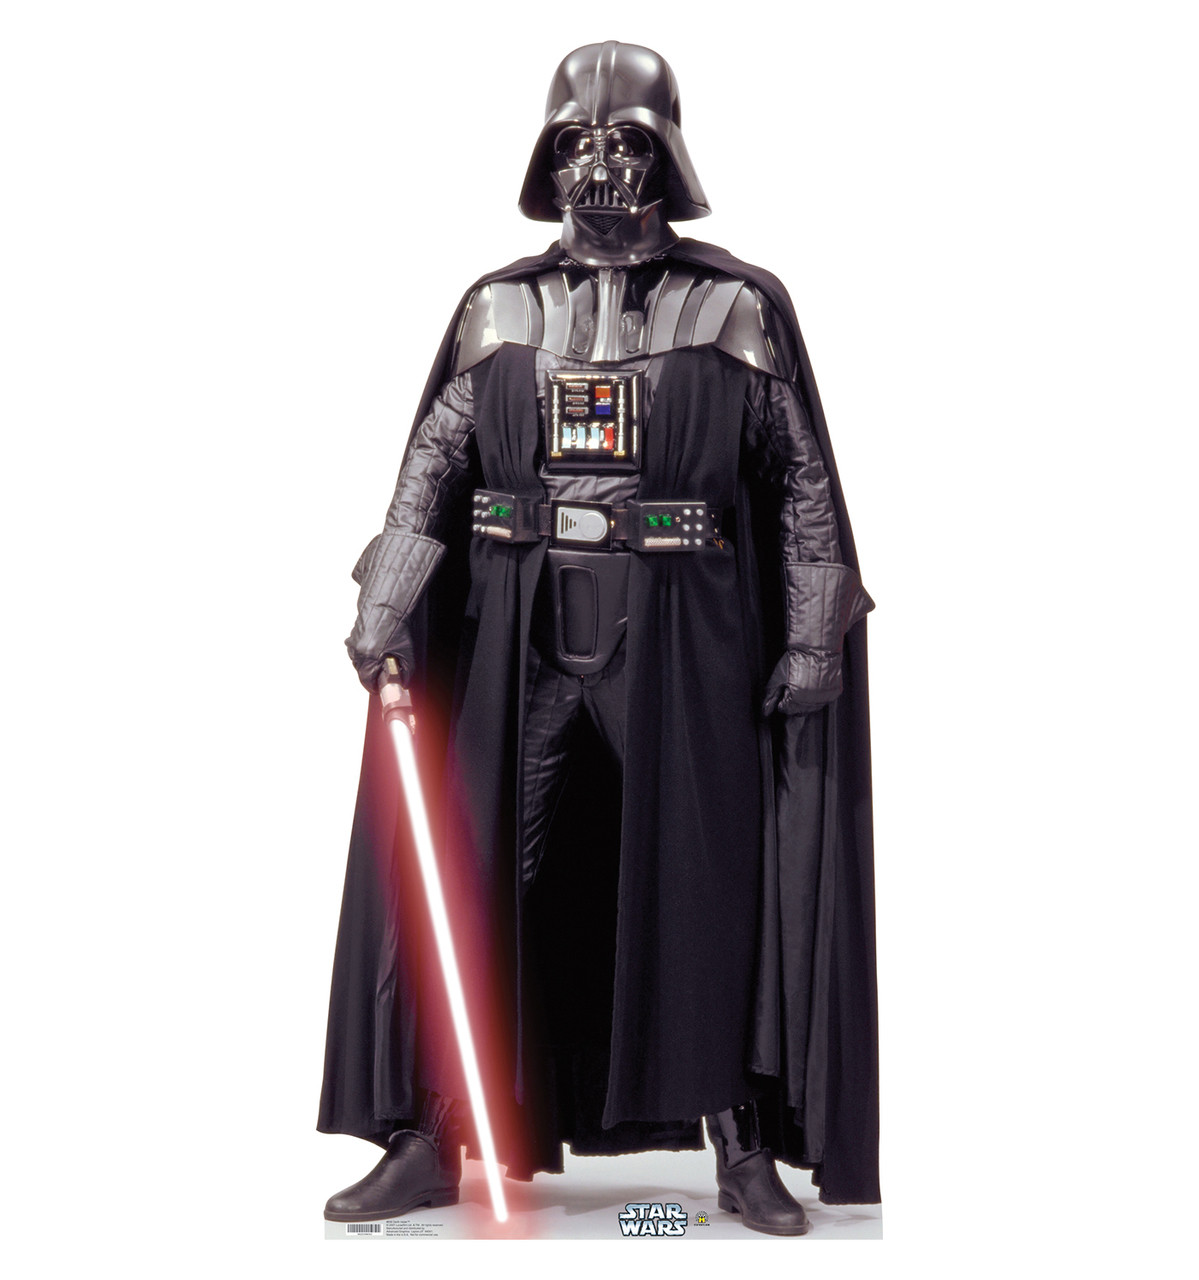 Darth Vader Star Wars Movie Film New Lifesize Standup Standee Cardboard Cutout